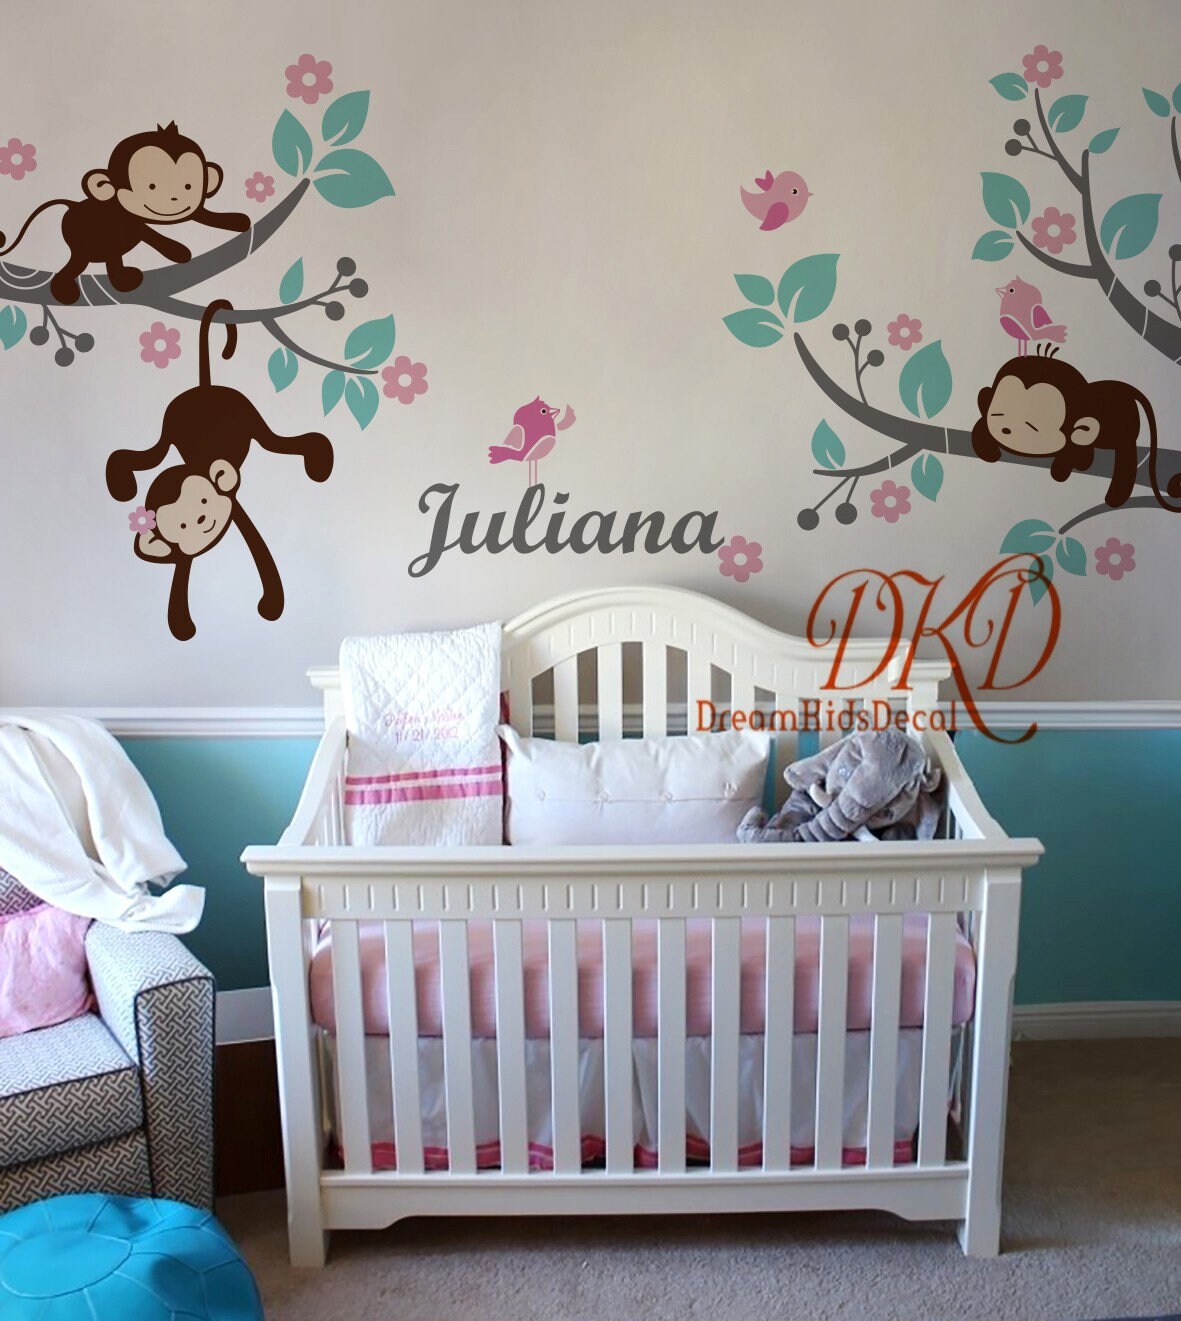 Jungle Monkey Tree Wall Stickers Art Decal Paper Baby Kids Bedroom Nursery Decor 